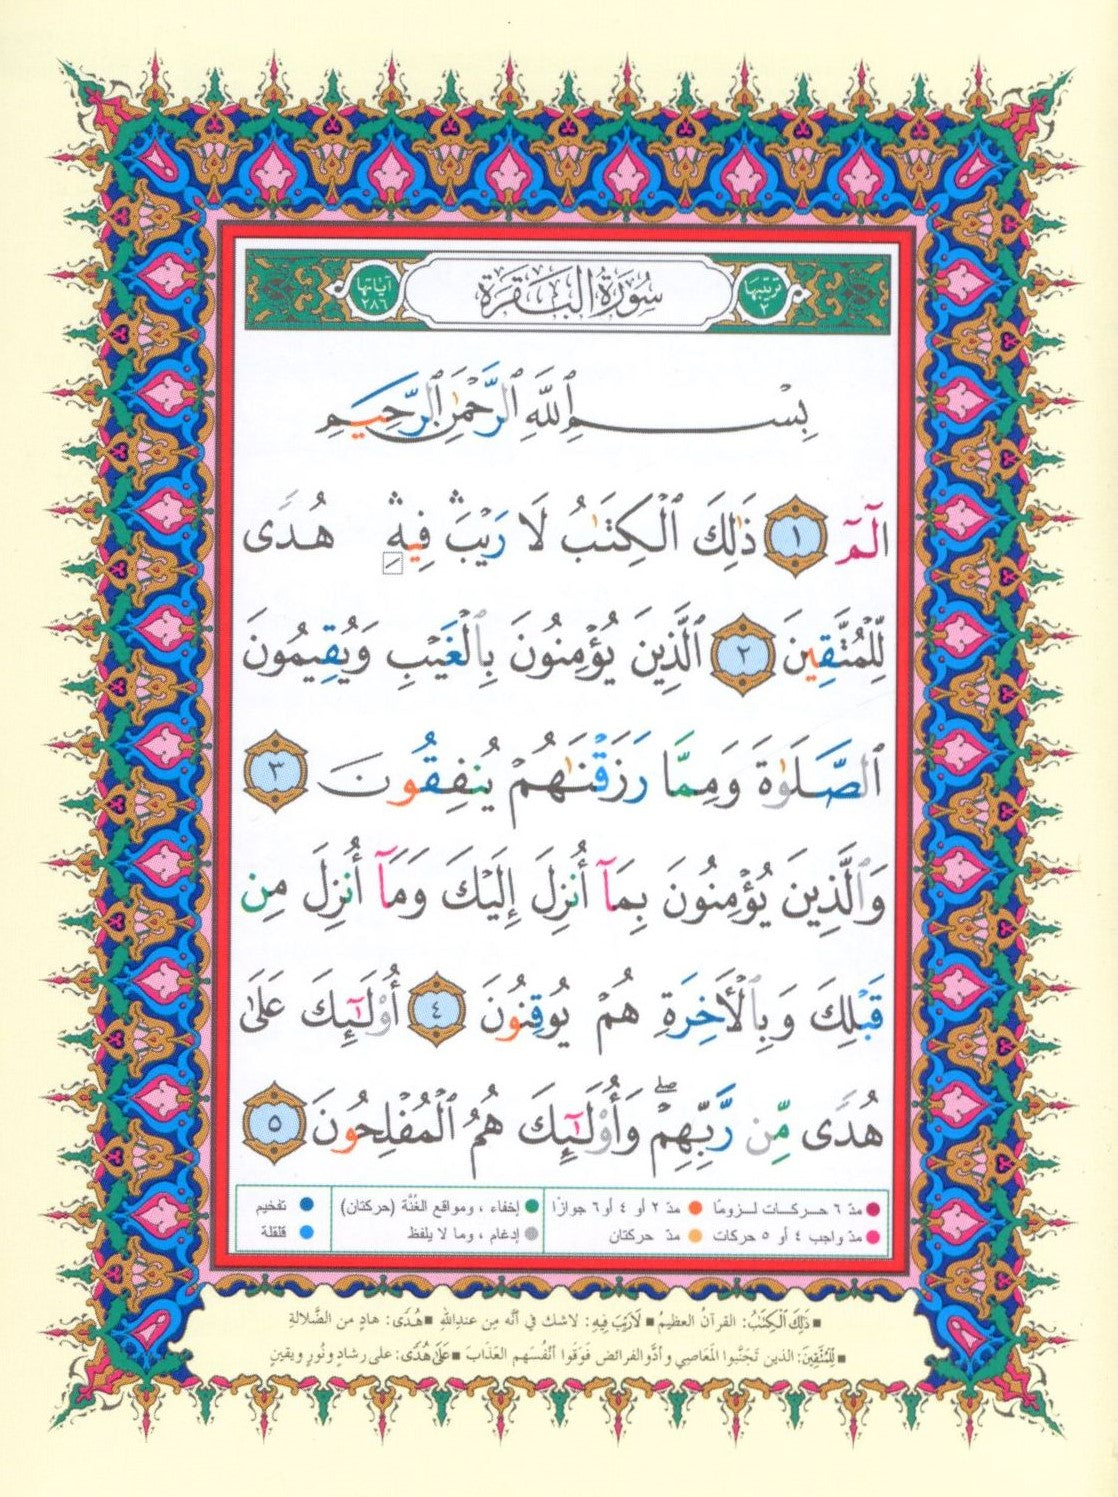 Color Coded Tajweed Qur'an With Zipper 4" x 5.5" Medium Size (Arabic Edition)